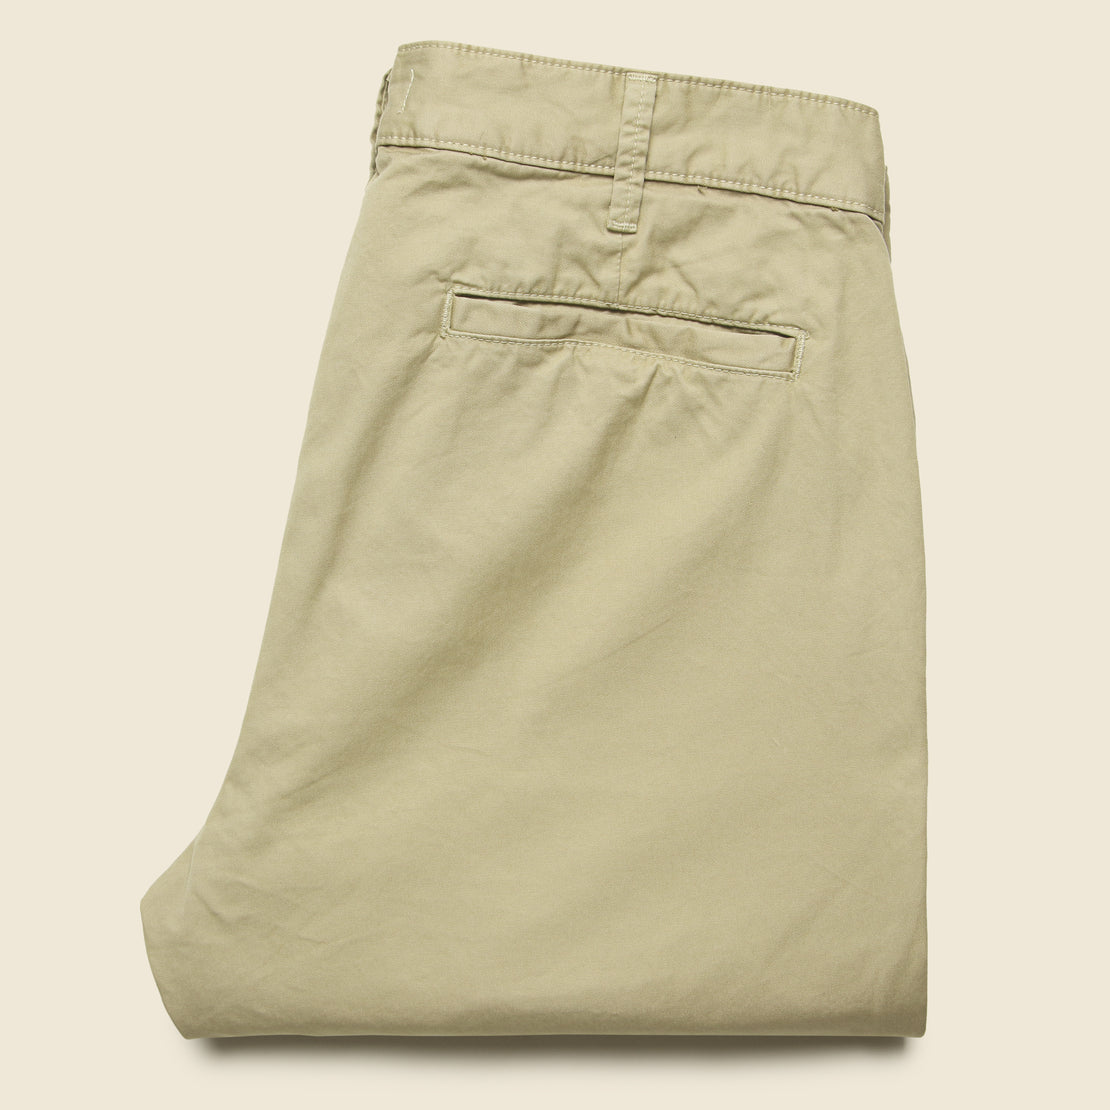 Twill Standard Chino - Khaki - Save Khaki - STAG Provisions - Pants - Twill